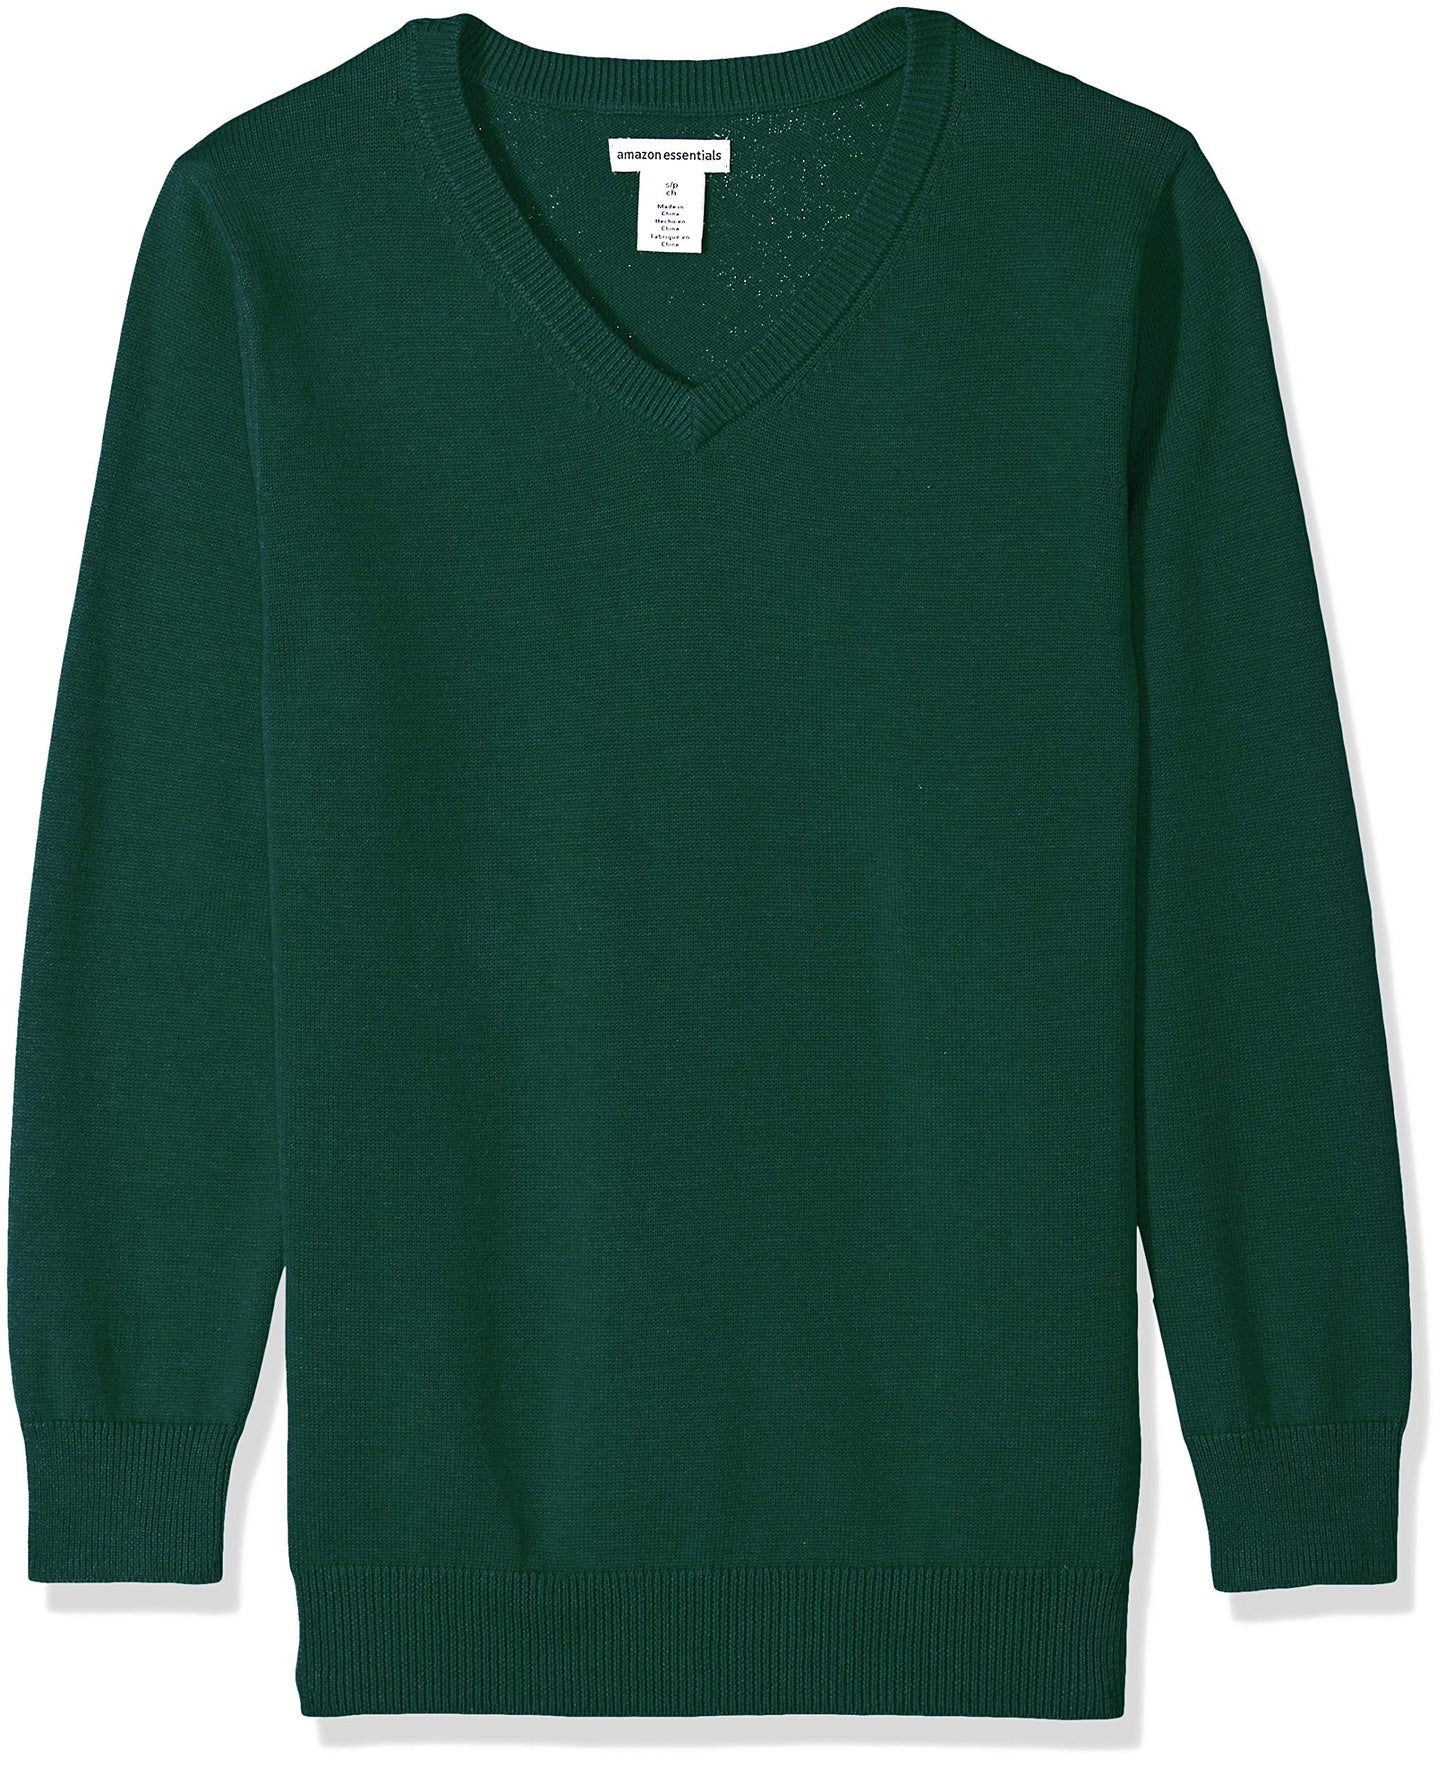 Essentials Toddler Boys' Uniform Cotton V-Neck Sweater, Green, 4T